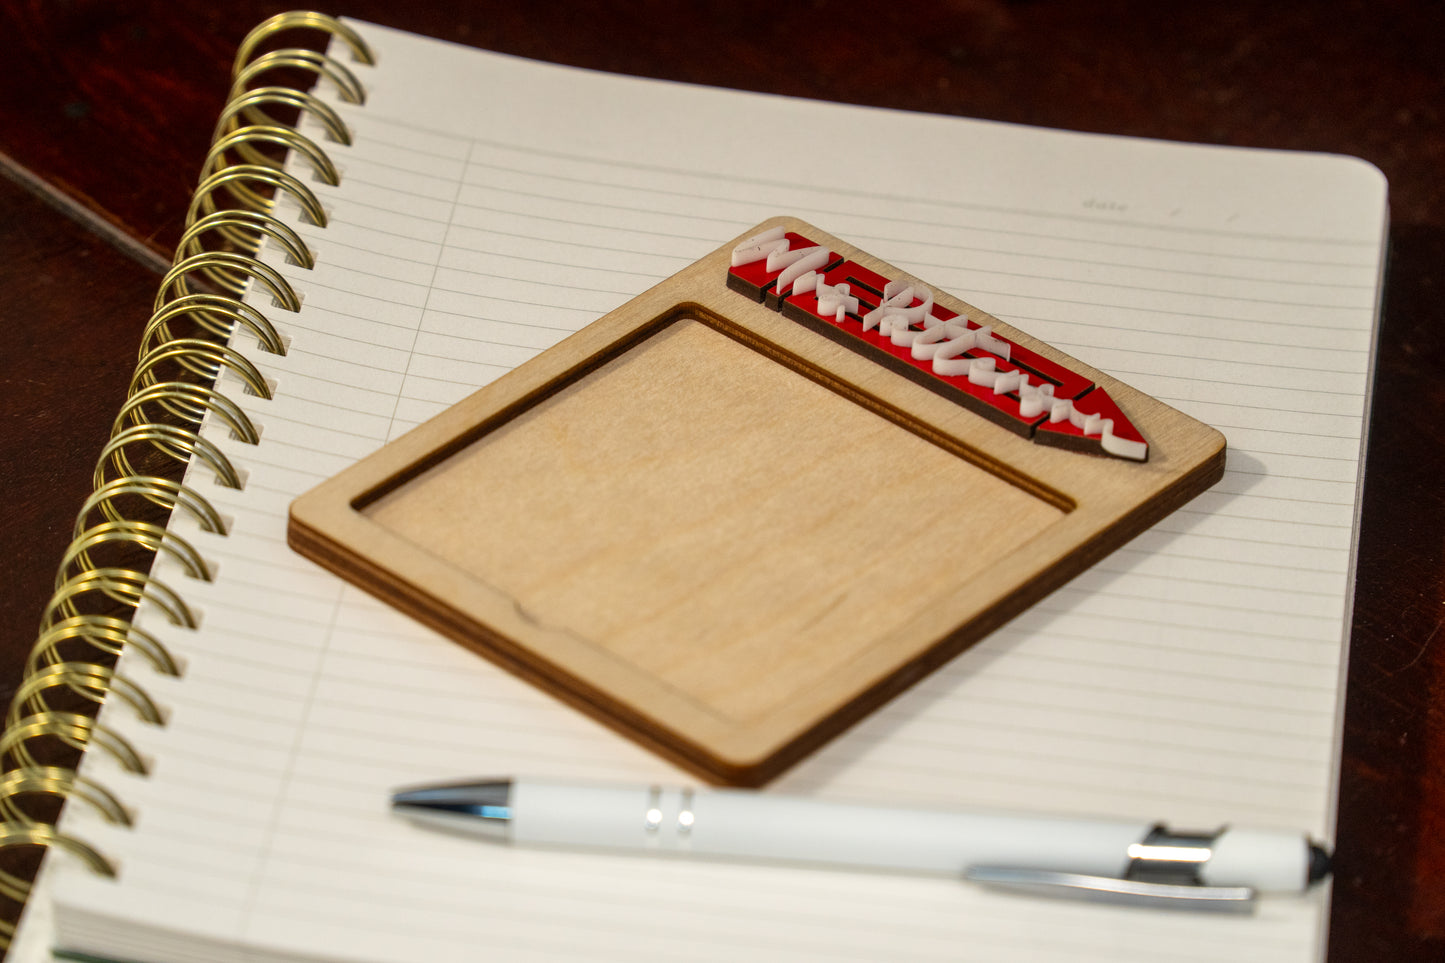 Personalized Sticky Note Holder | Teacher Gift, Teacher Appreciation, Office Gift